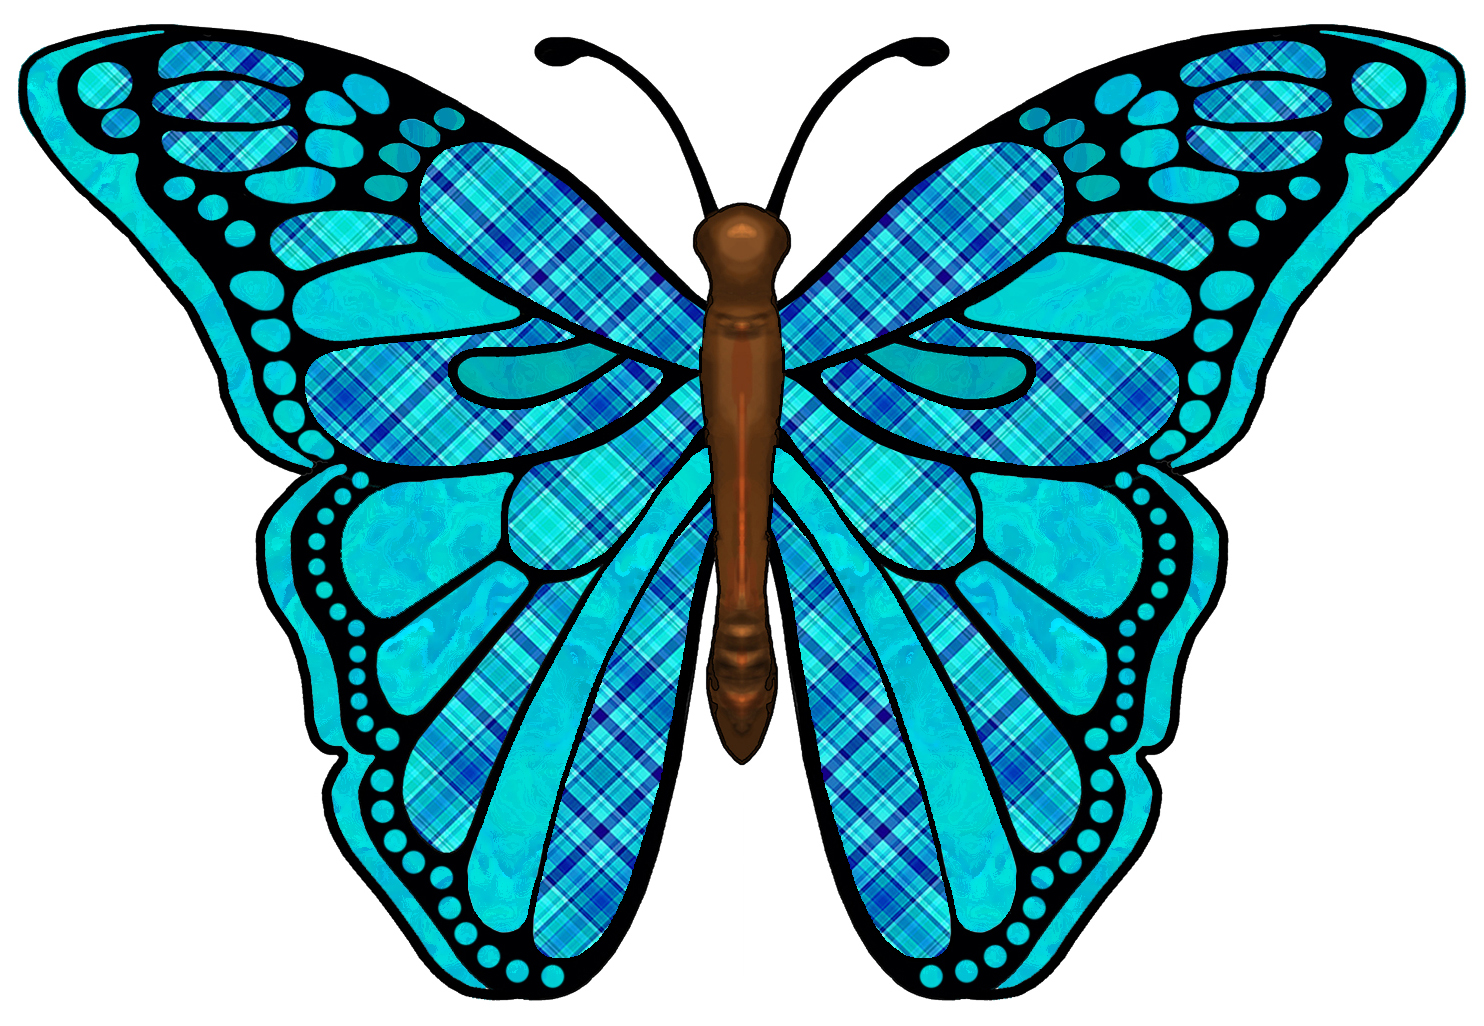 Butterfly wings clipart